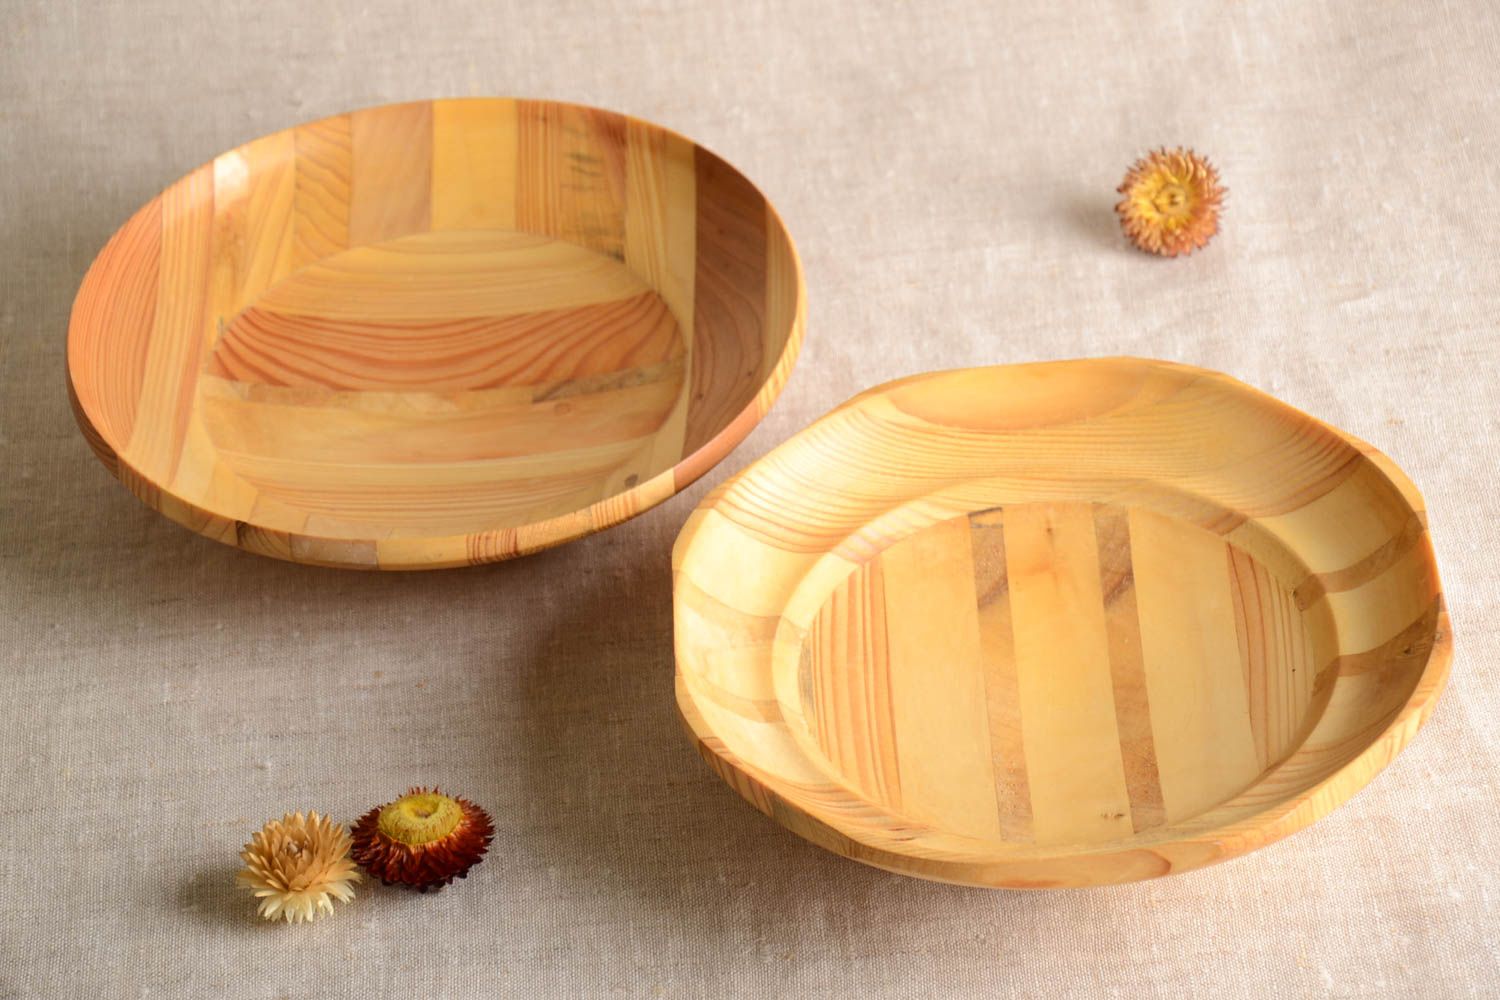 Handmade wooden plate design plate set 2 pieces wood craft kitchen supplies photo 1